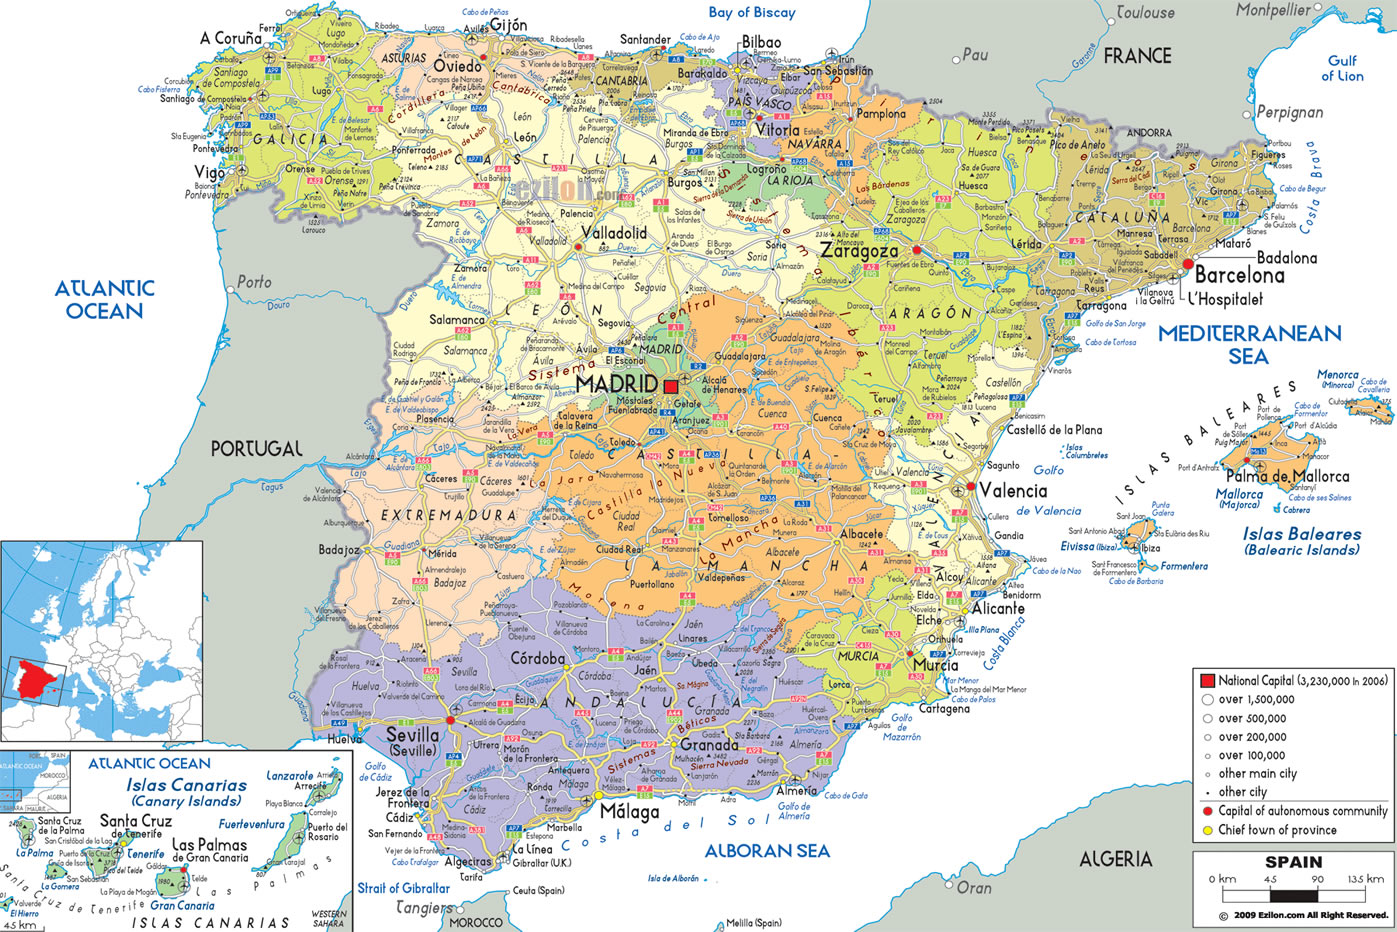 Spanien Karte